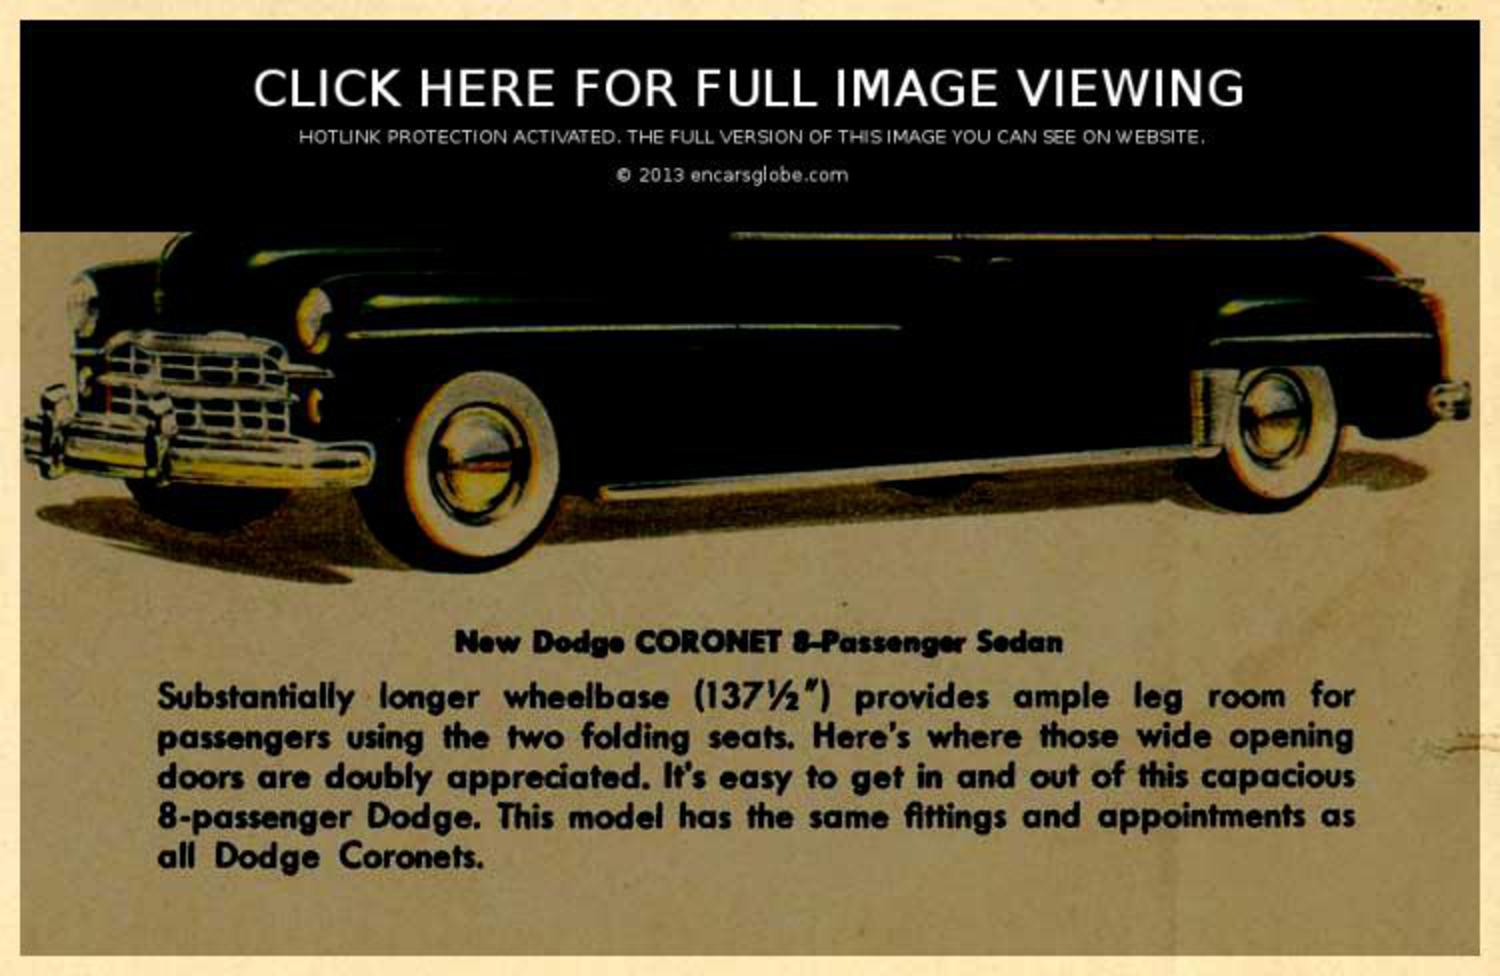 Dodge Coronet 8 passenger sedan Photo Gallery: Photo #08 out of 12 ...